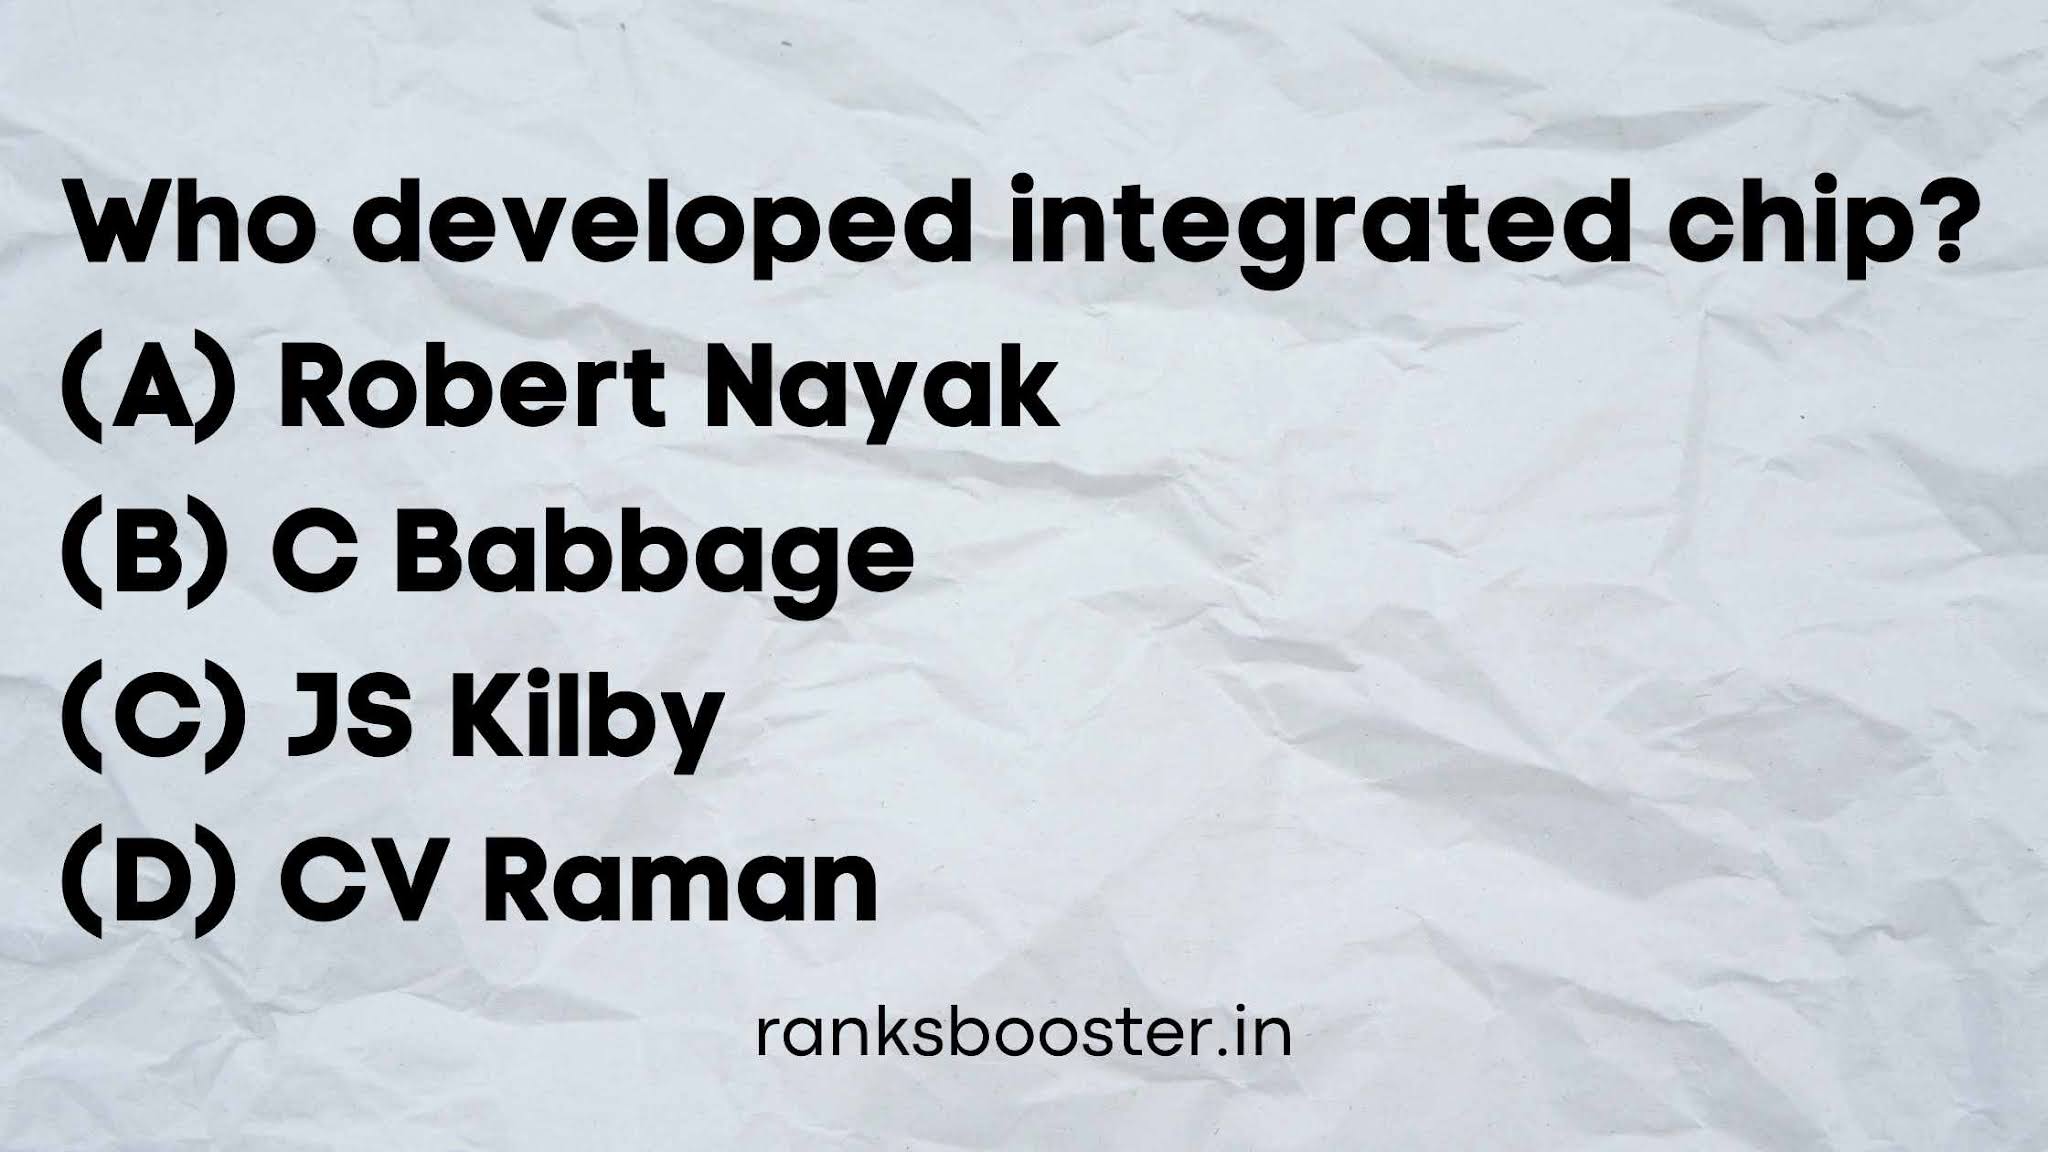 Who developed integrated chip? (A) Robert Nayak (B) C Babbage (C) JS Kilby (D) CV Raman